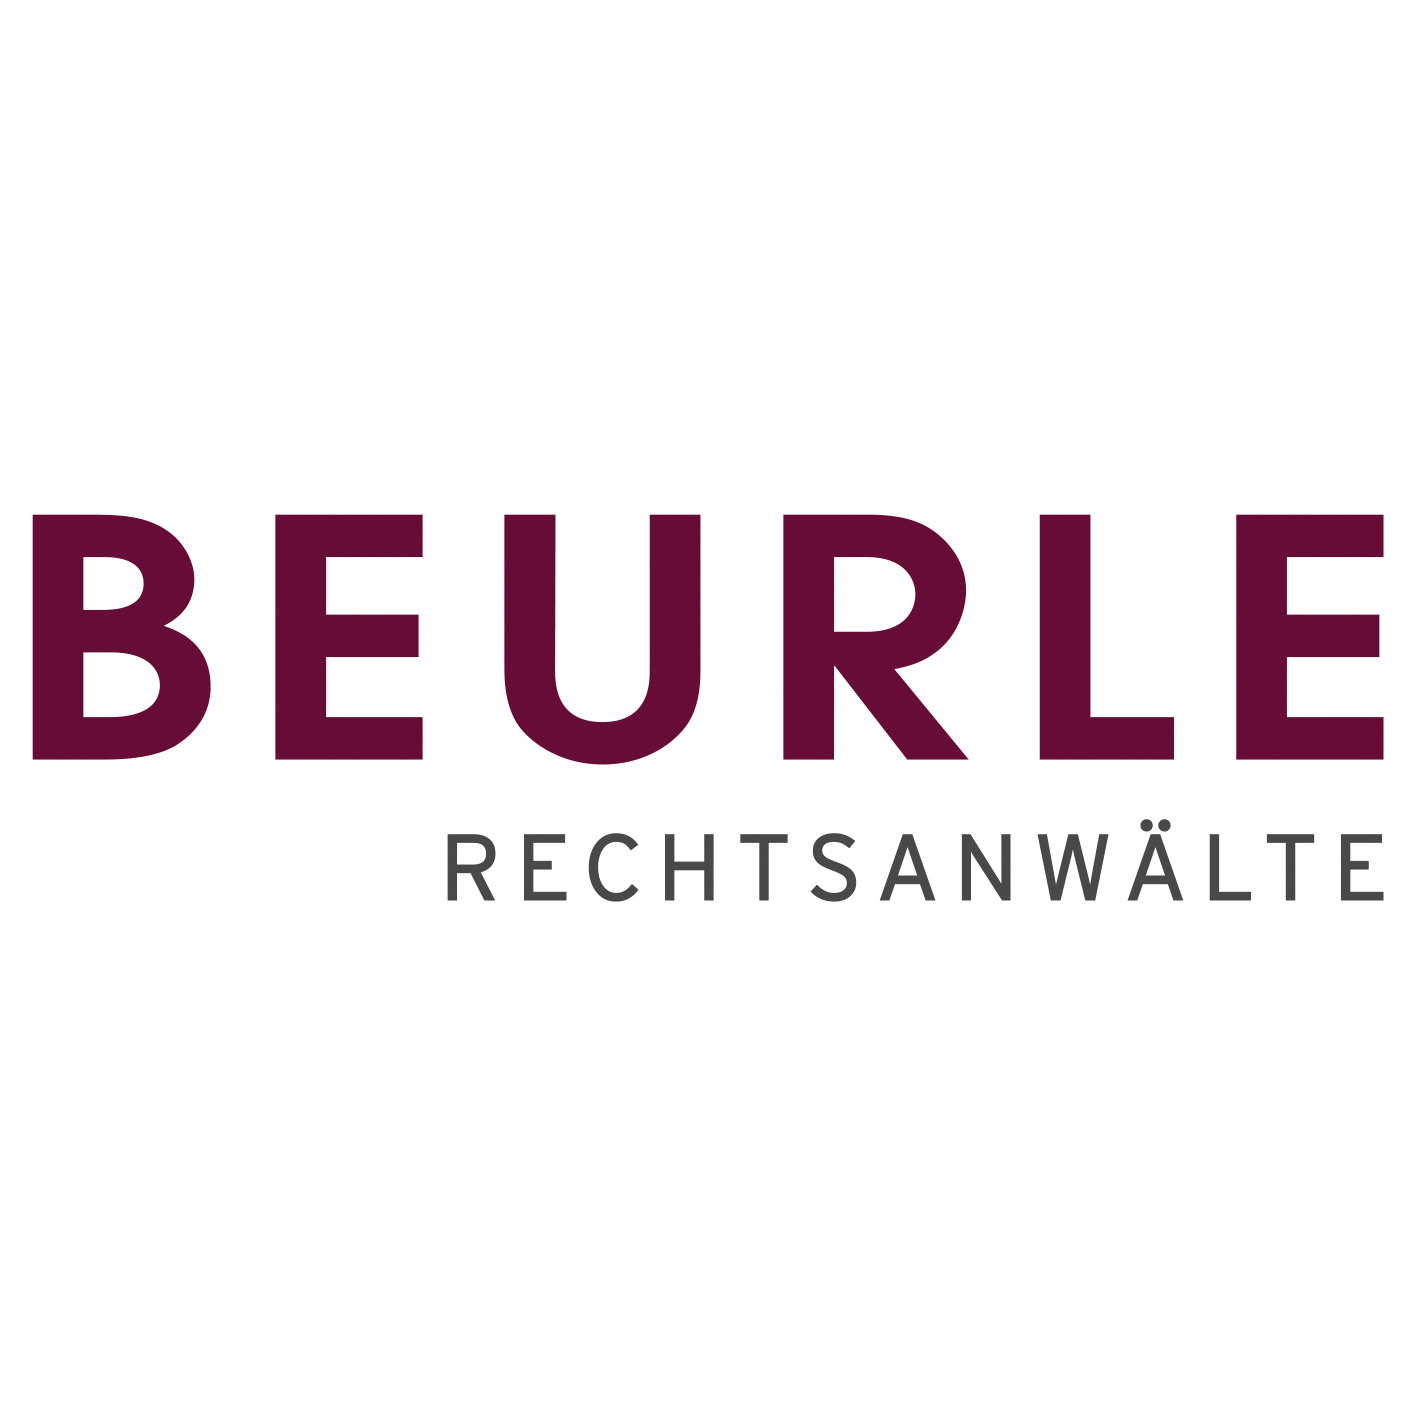 BEURLRE Rechtsanwälte GmbH & Co KG